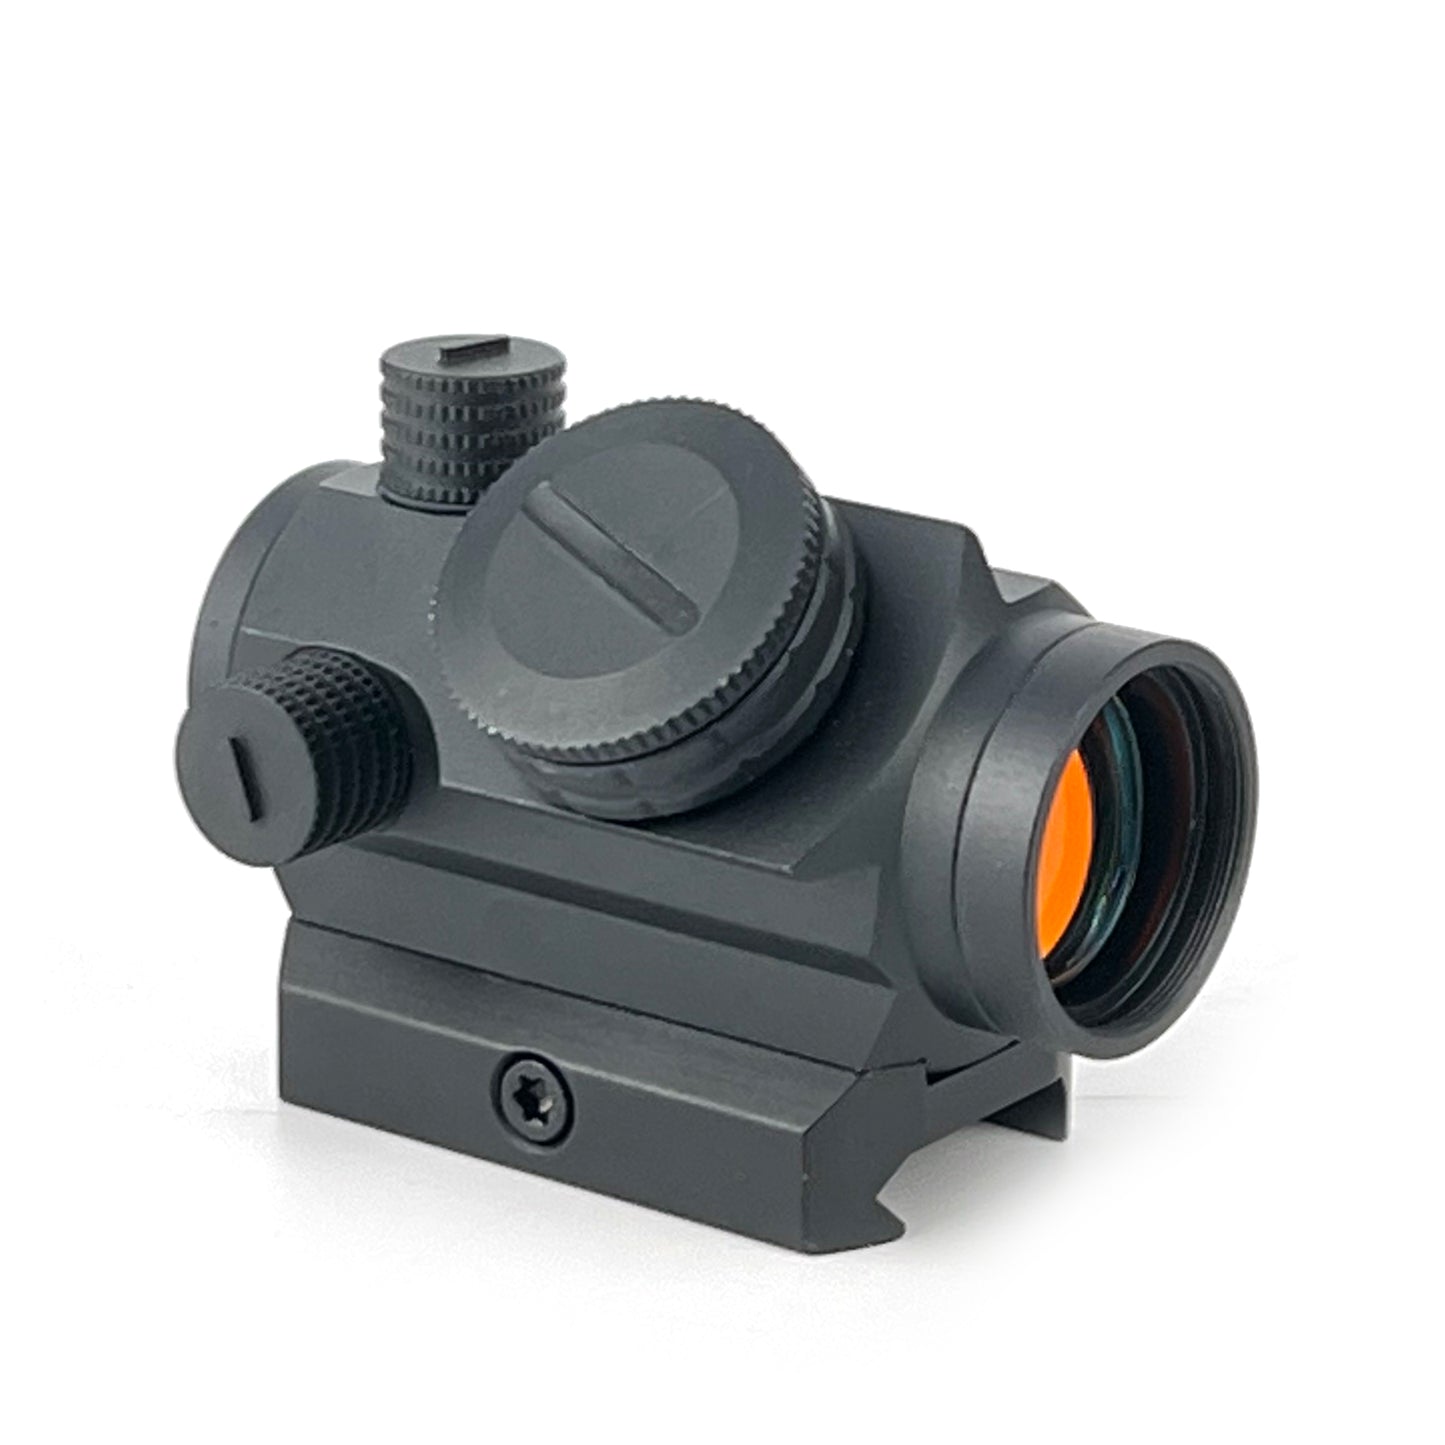 1MOA Mini Red Dot Sight Shooting Reflex Sights Waterproof Shockproof Fogproof Red Dot Scope